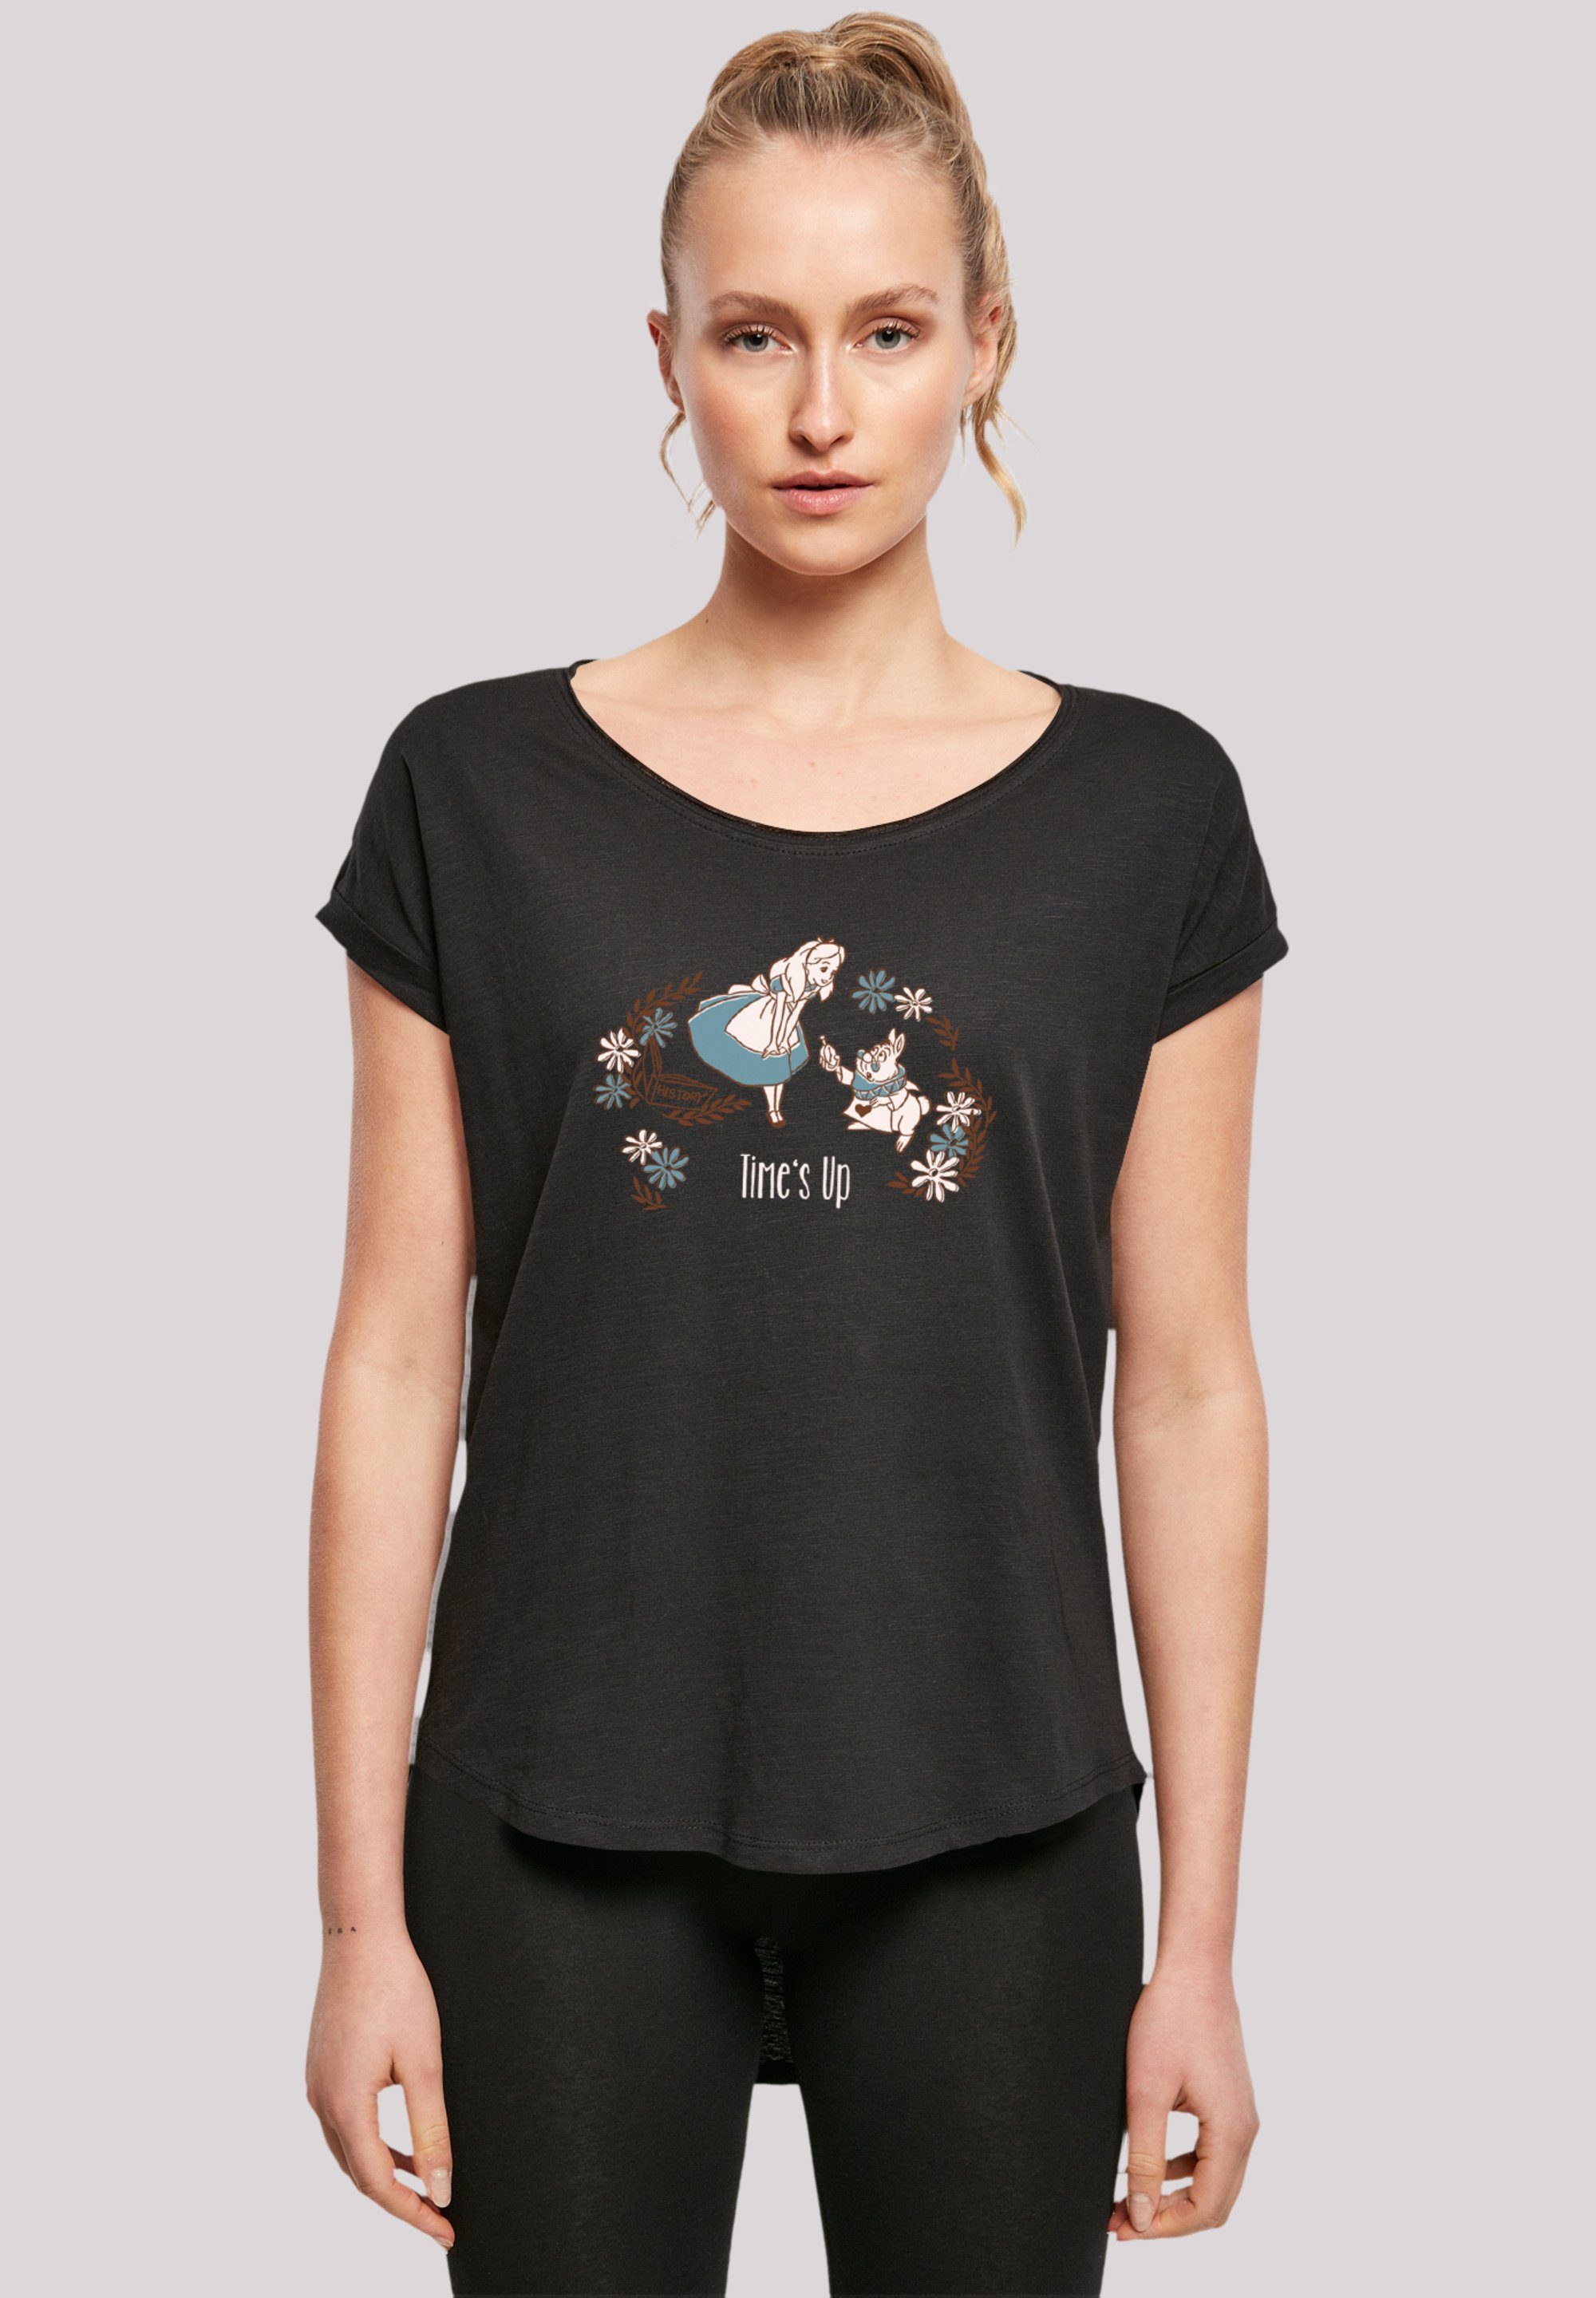 F4NT4STIC T-Shirt Disney Alice im Wunderland Time's Up Premium Qualität,  Hinten extra lang geschnittenes Damen T-Shirt